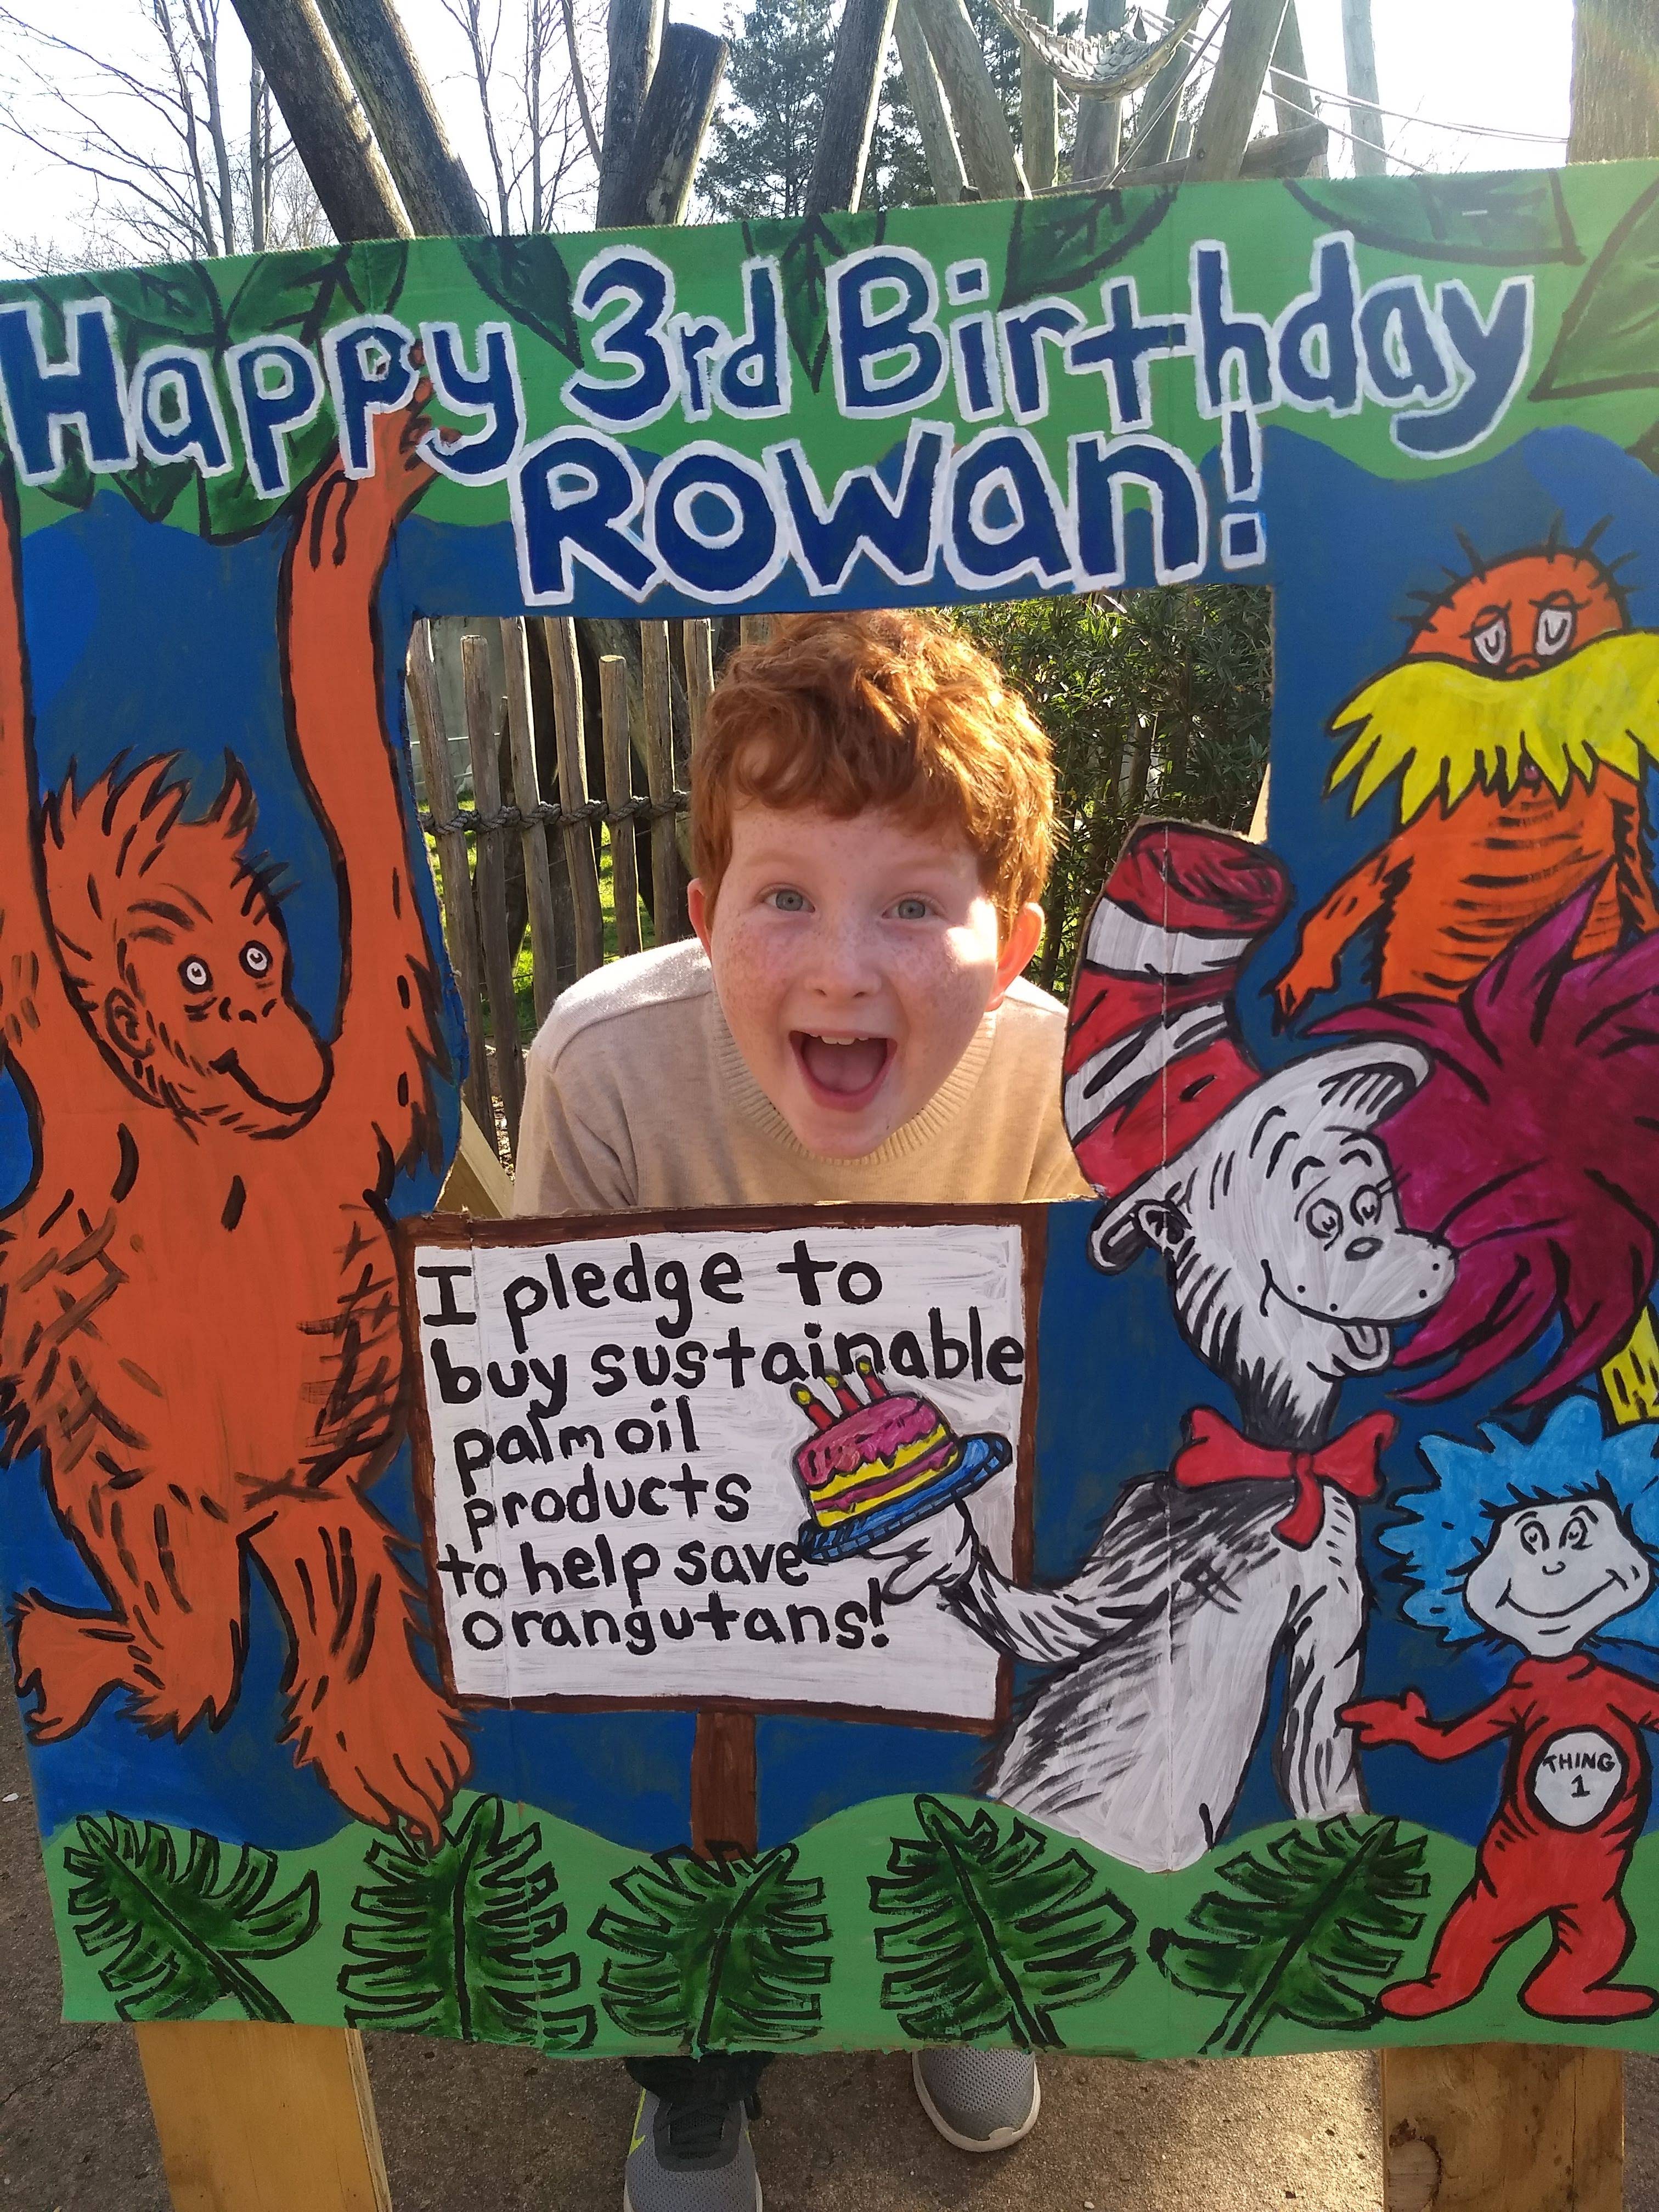 Rowan birthday party